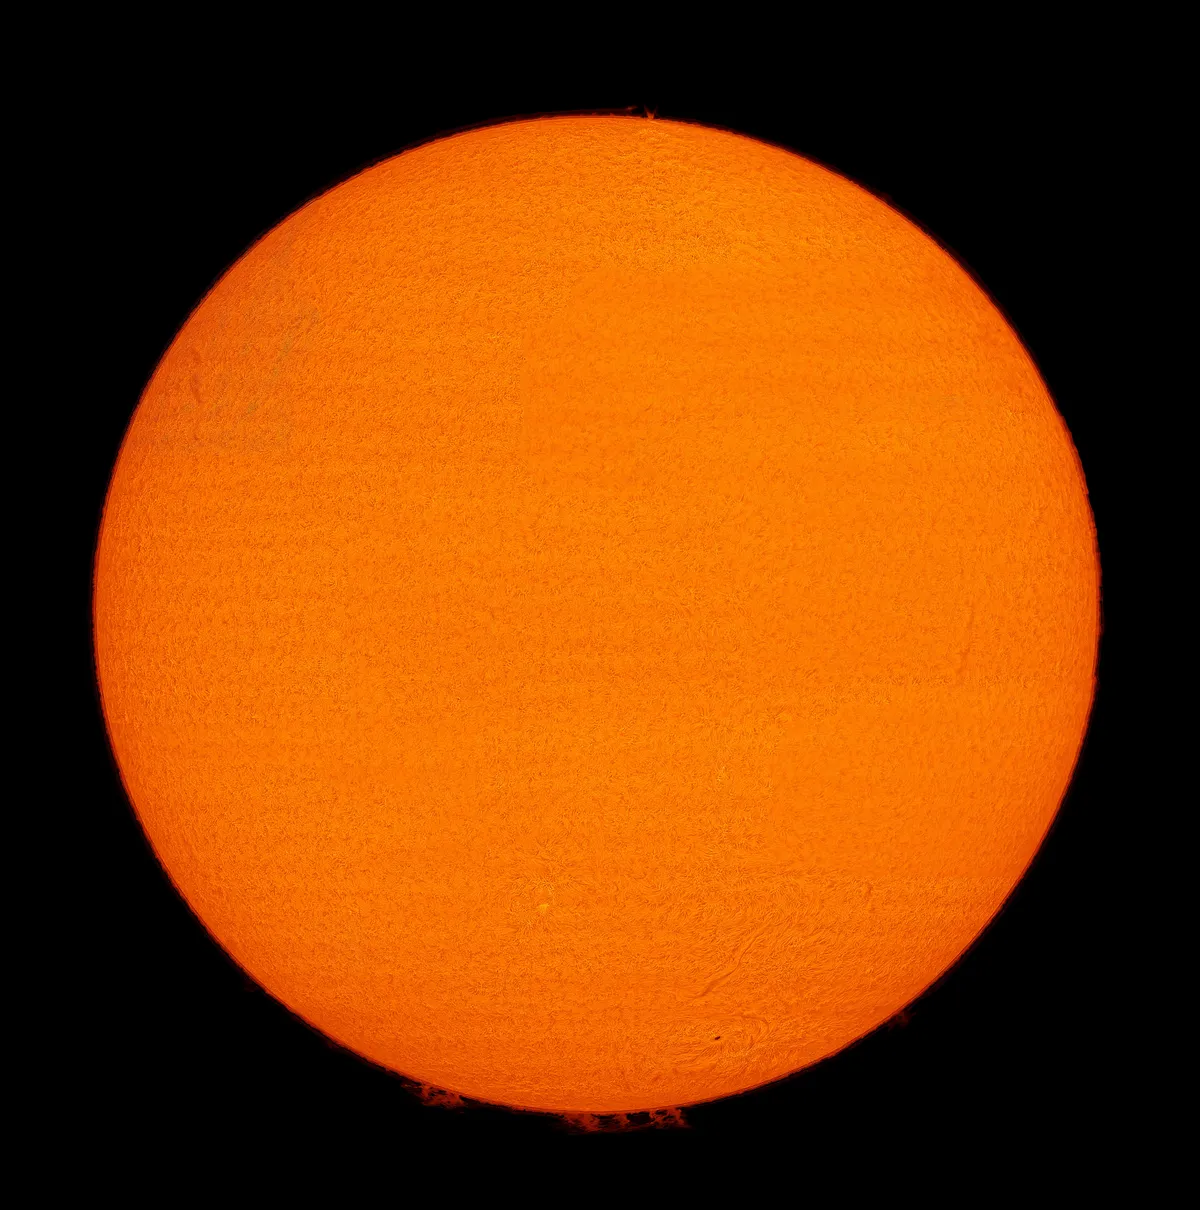 Full Solar Disk by Wayne Stallard, Basildon, Essex, UK. Equipment: Takahashi FSQ106, iOptron ZEQ25GT Mount, Quark eyepiece, ASI 174MM Camera